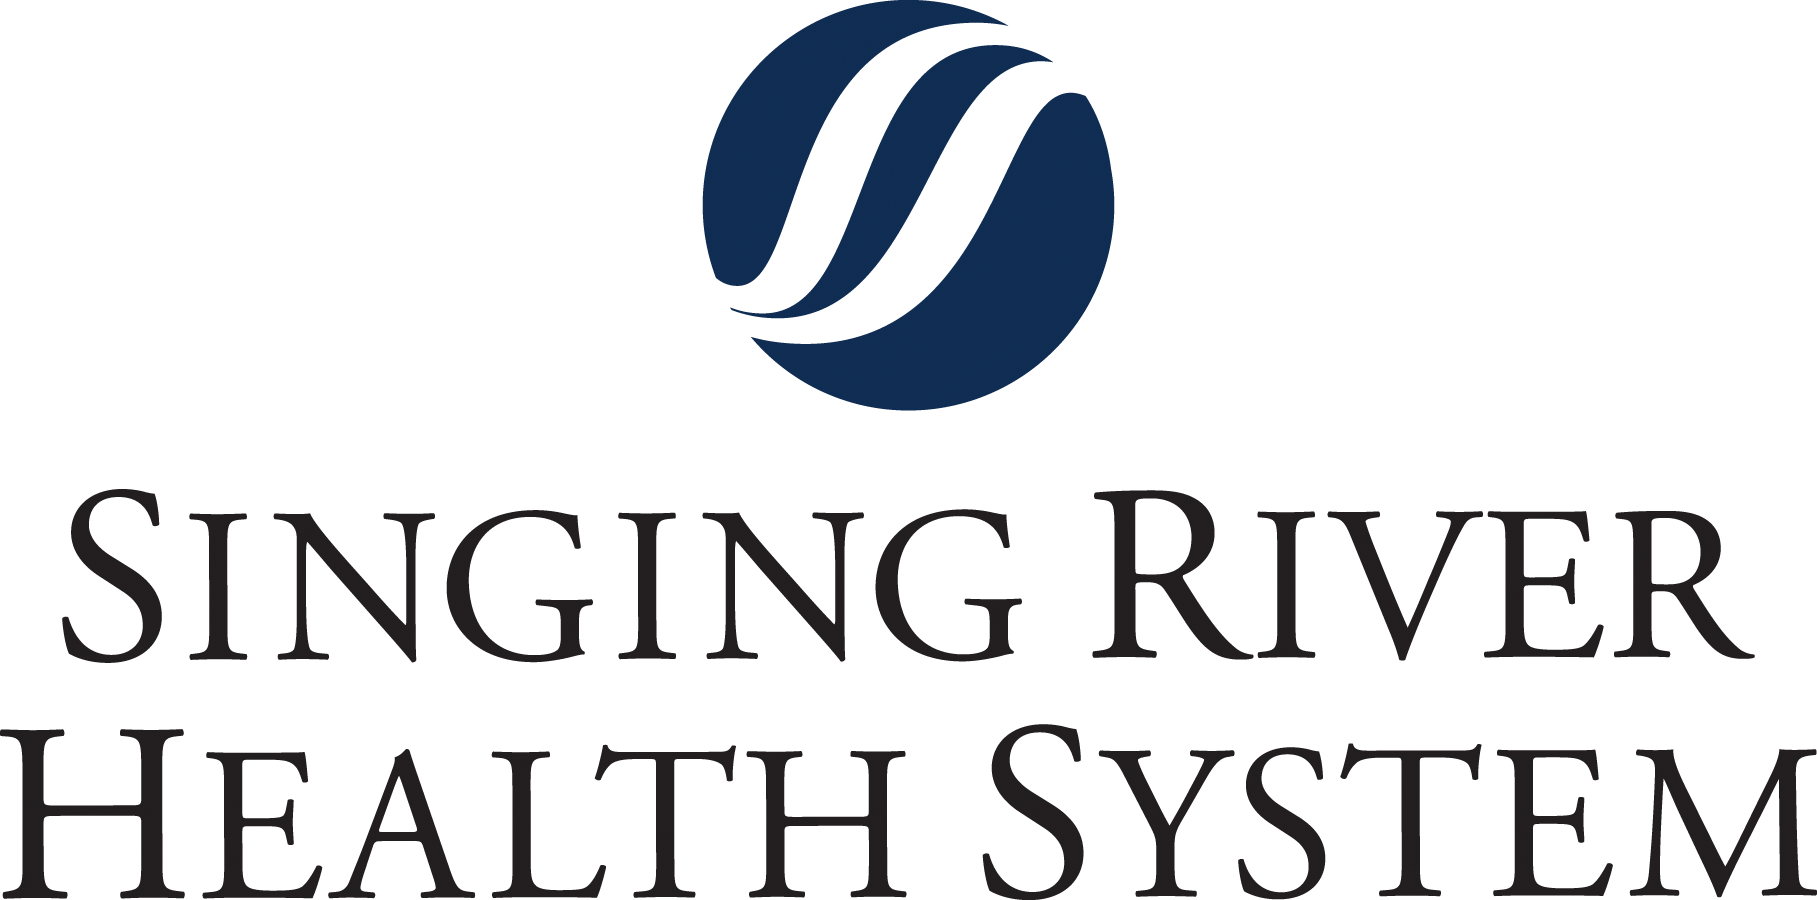 Singing River Health System